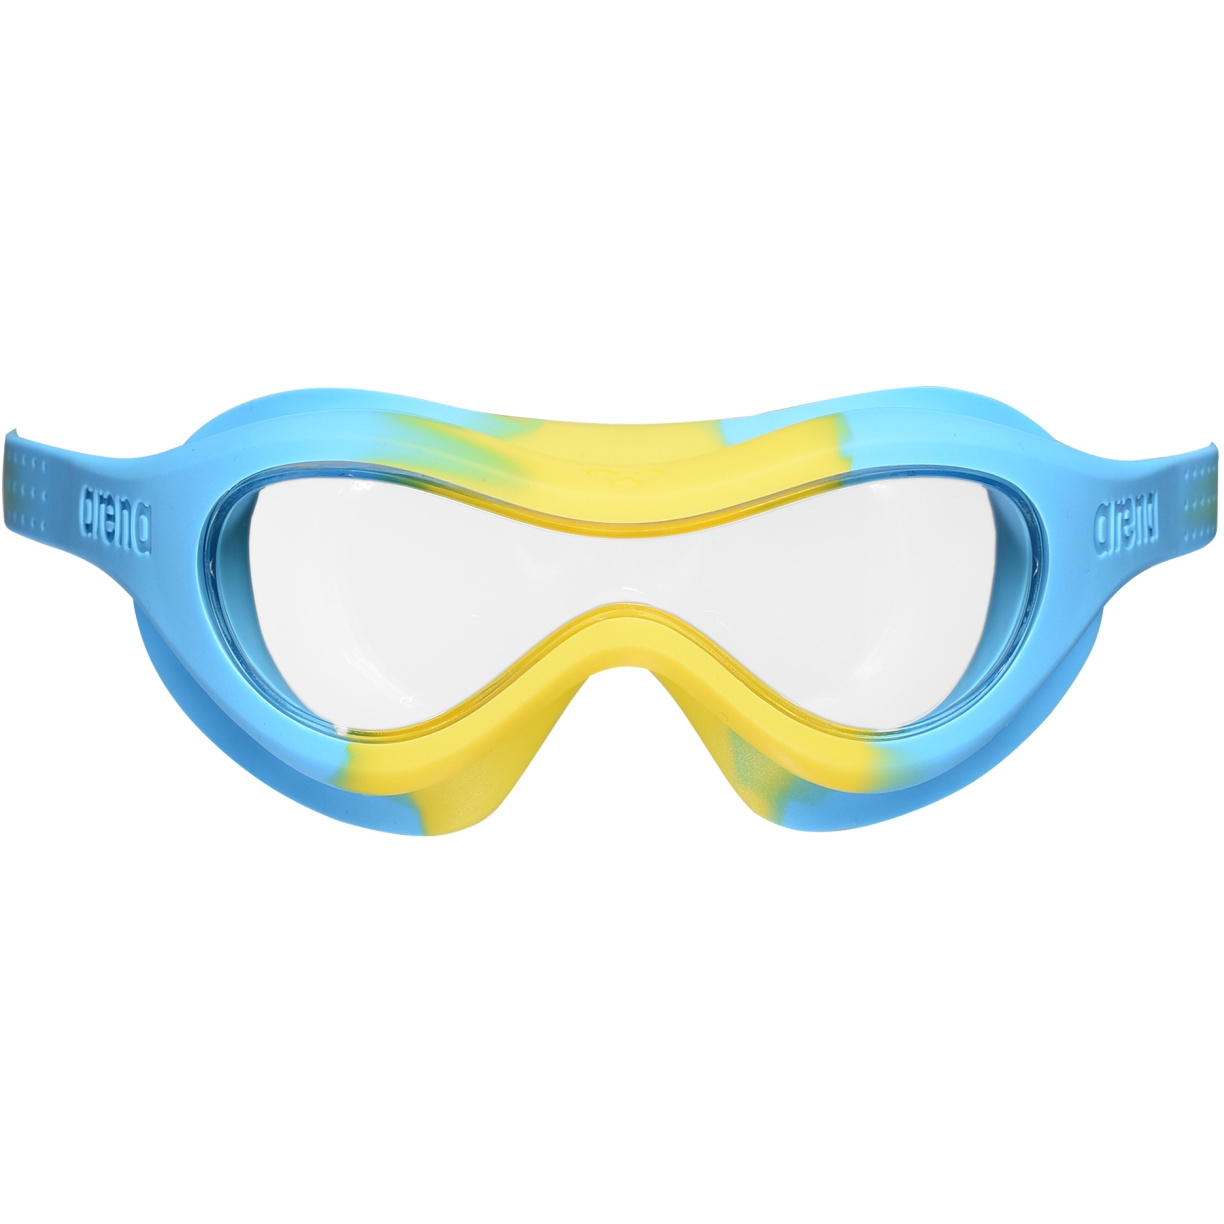 Lunettes de natation Arena Spider bleu avec verres transparents